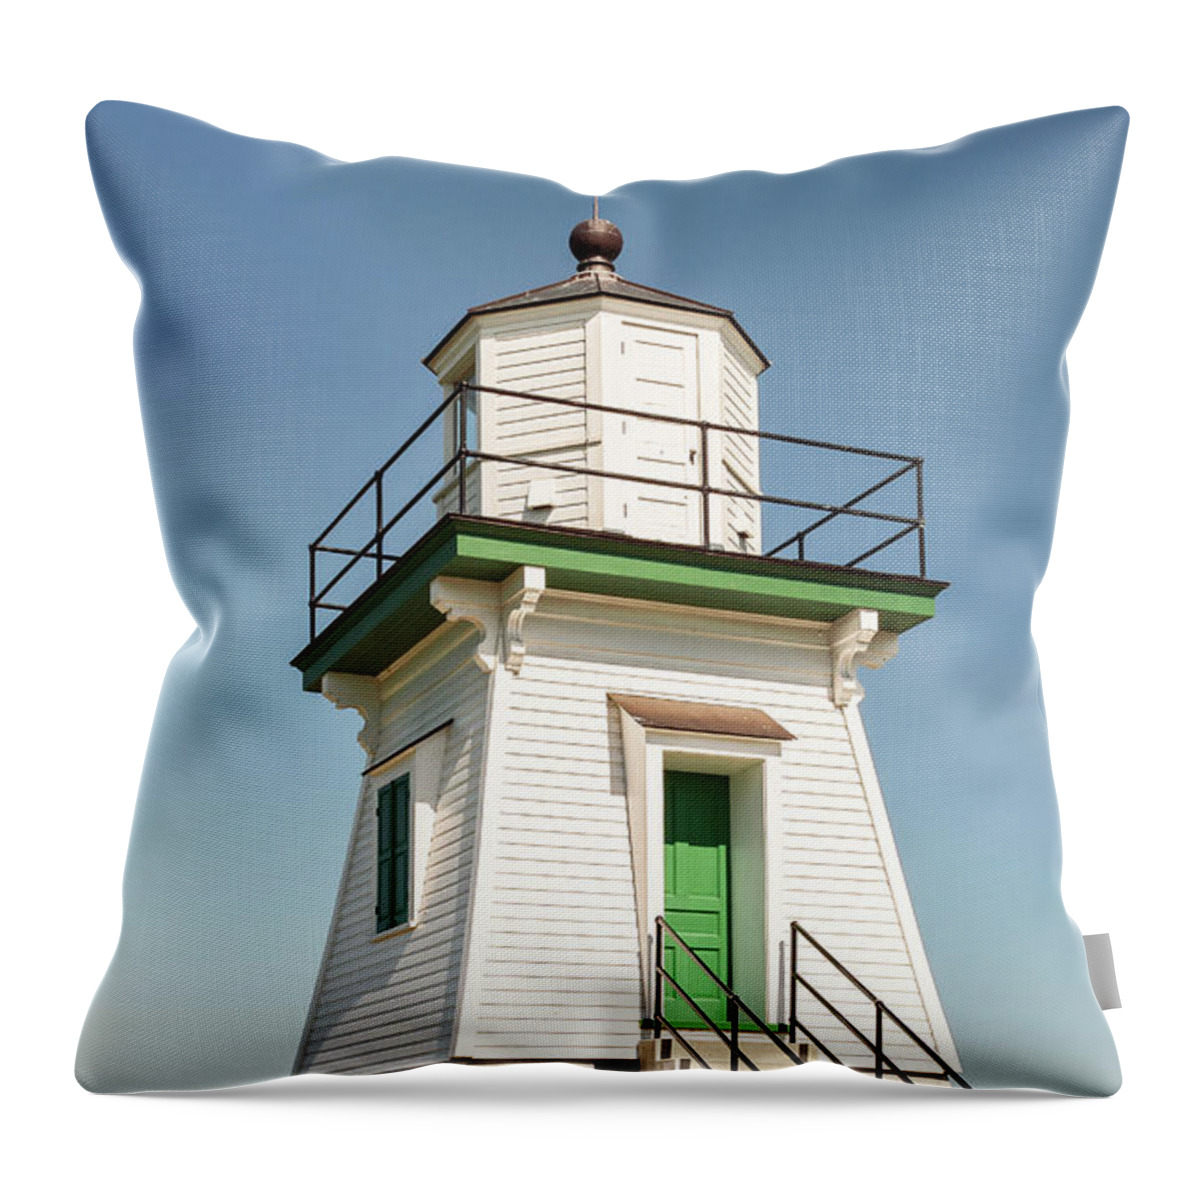 Port Clinton Lighthouse Throw Pillow featuring the photograph Port Clinton Lighthouse Up Close 1 by Marianne Campolongo